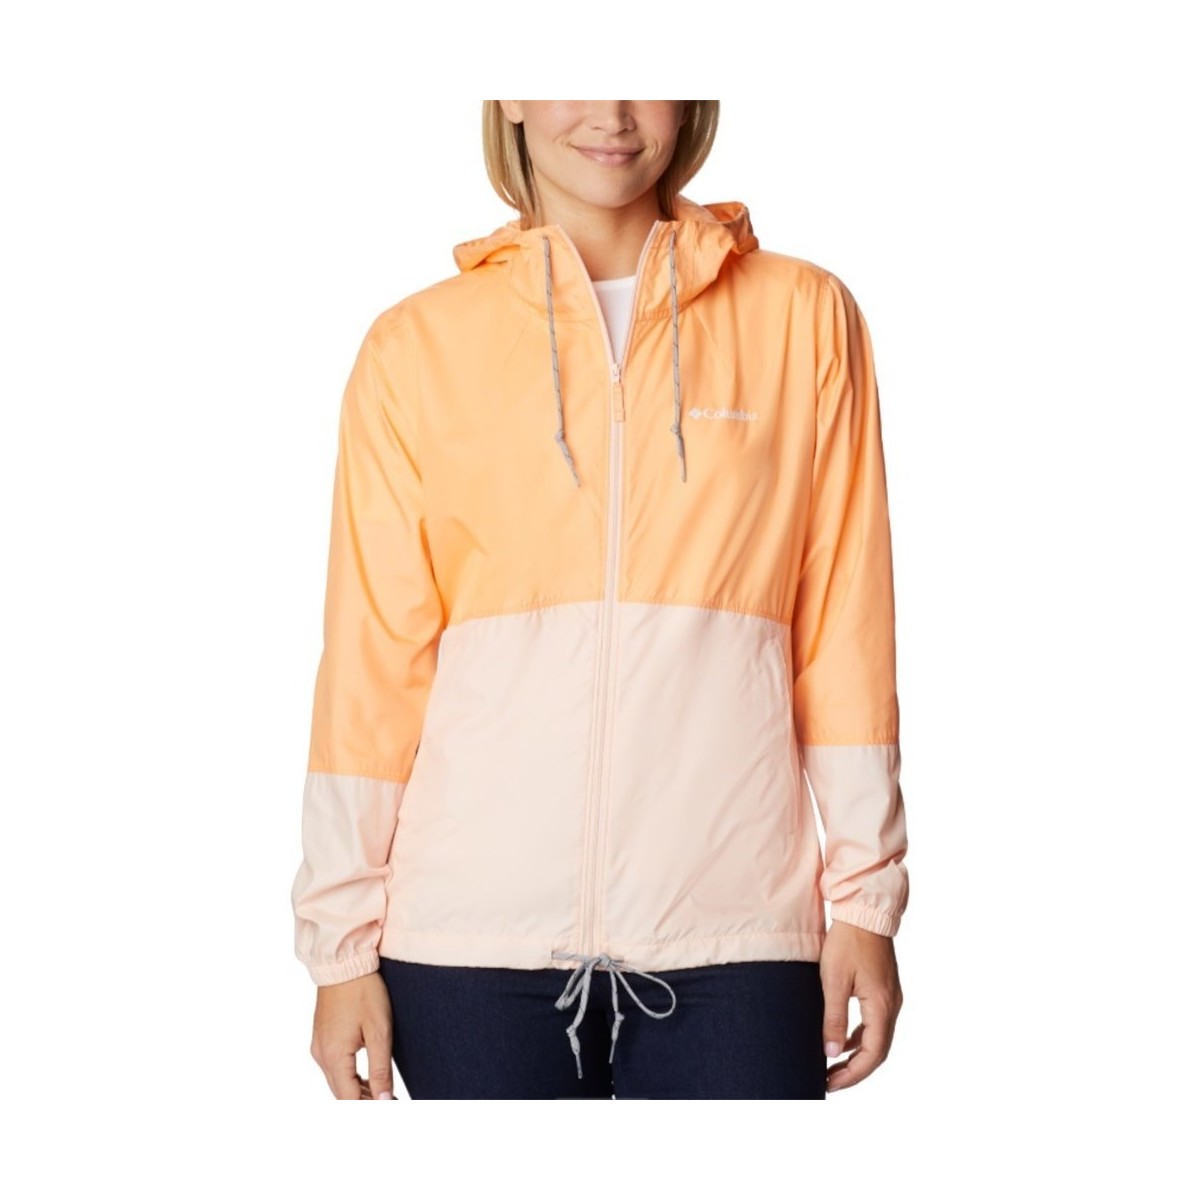 Textiel Dames Jacks / Blazers Columbia Flash Forward Windbreaker Jacket Beige, Orange